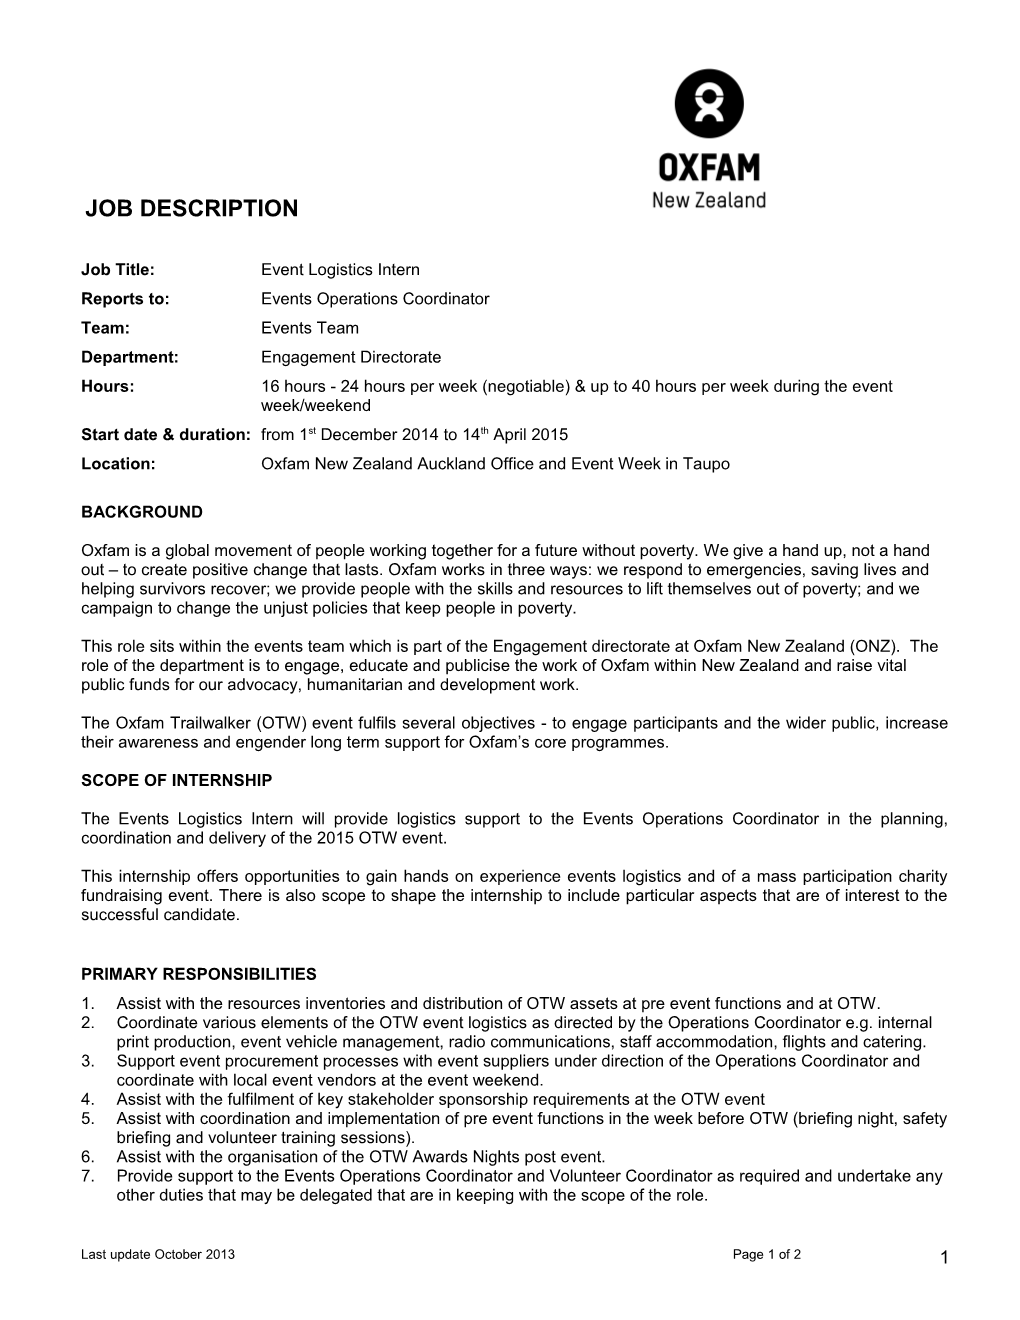 Oxfam New Zealand Job Description s1